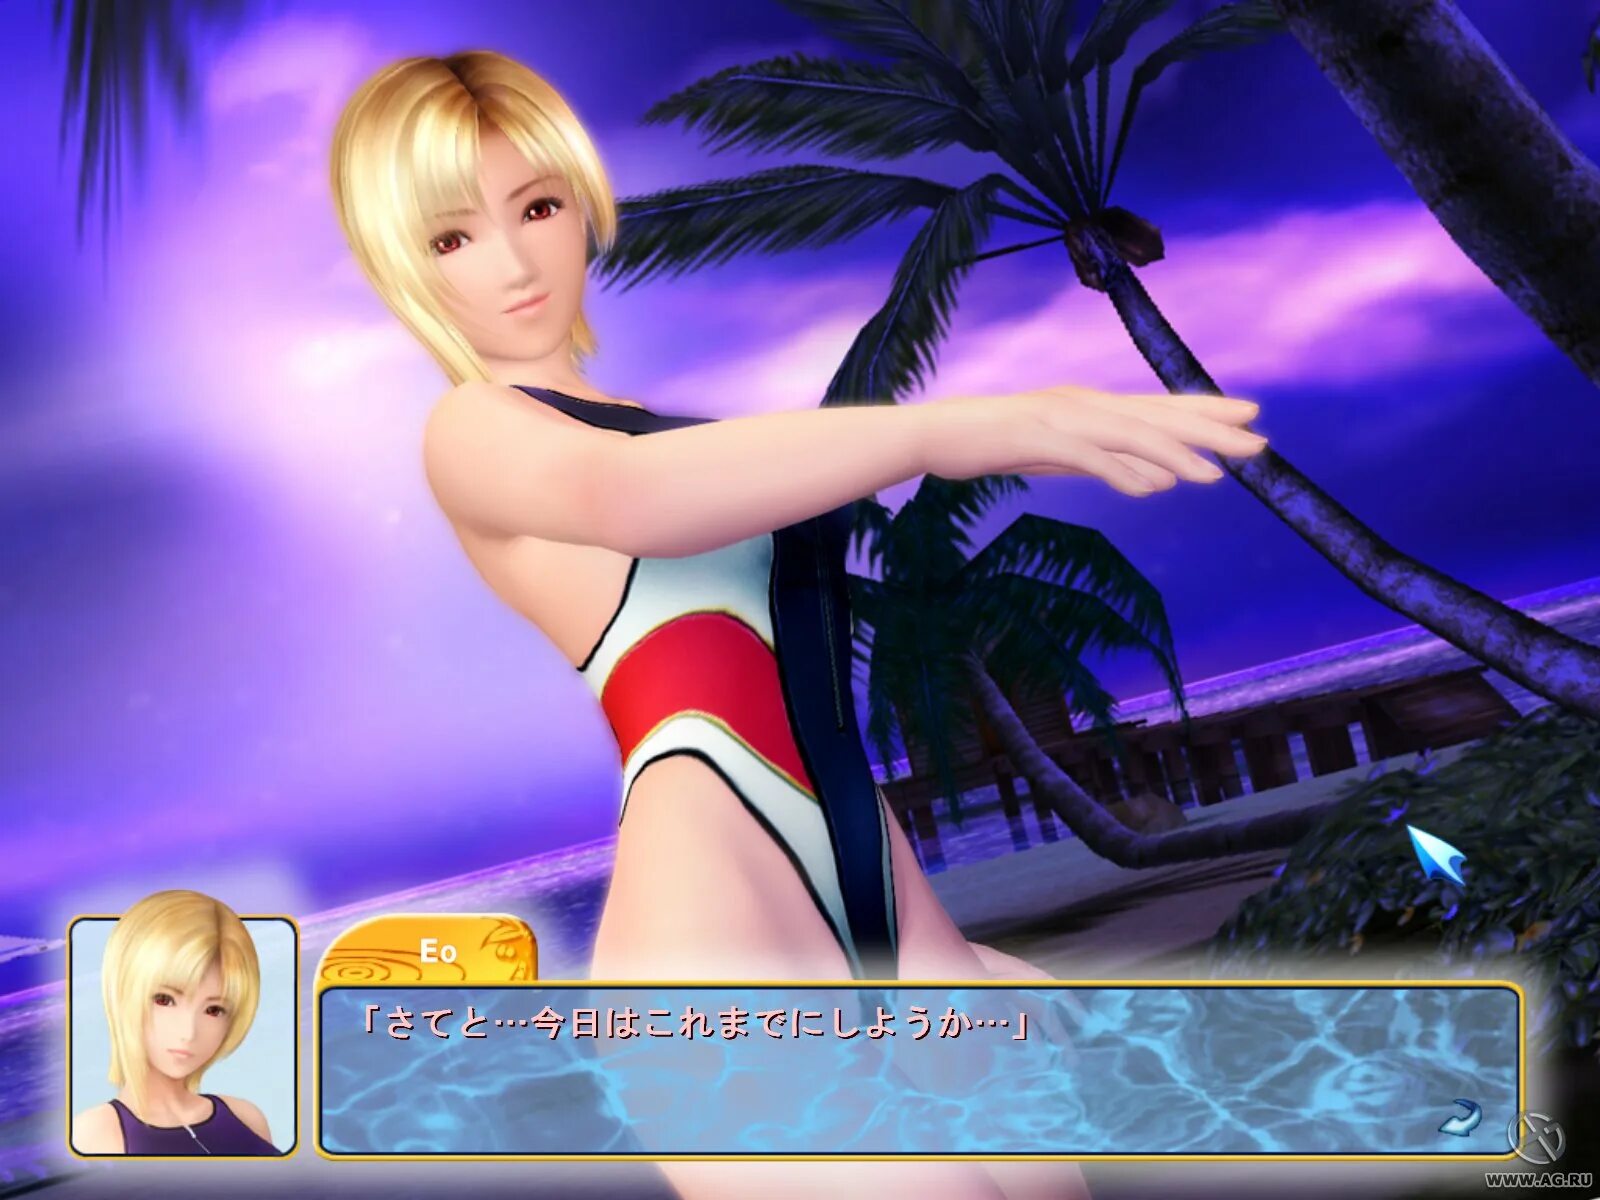 Sexy Beach последняя версия. Beach Premium Resort игра. Sexy Beach 3 (русская версия, без цензуры). Игра про девушку на пляже. Версии игр без цензуры